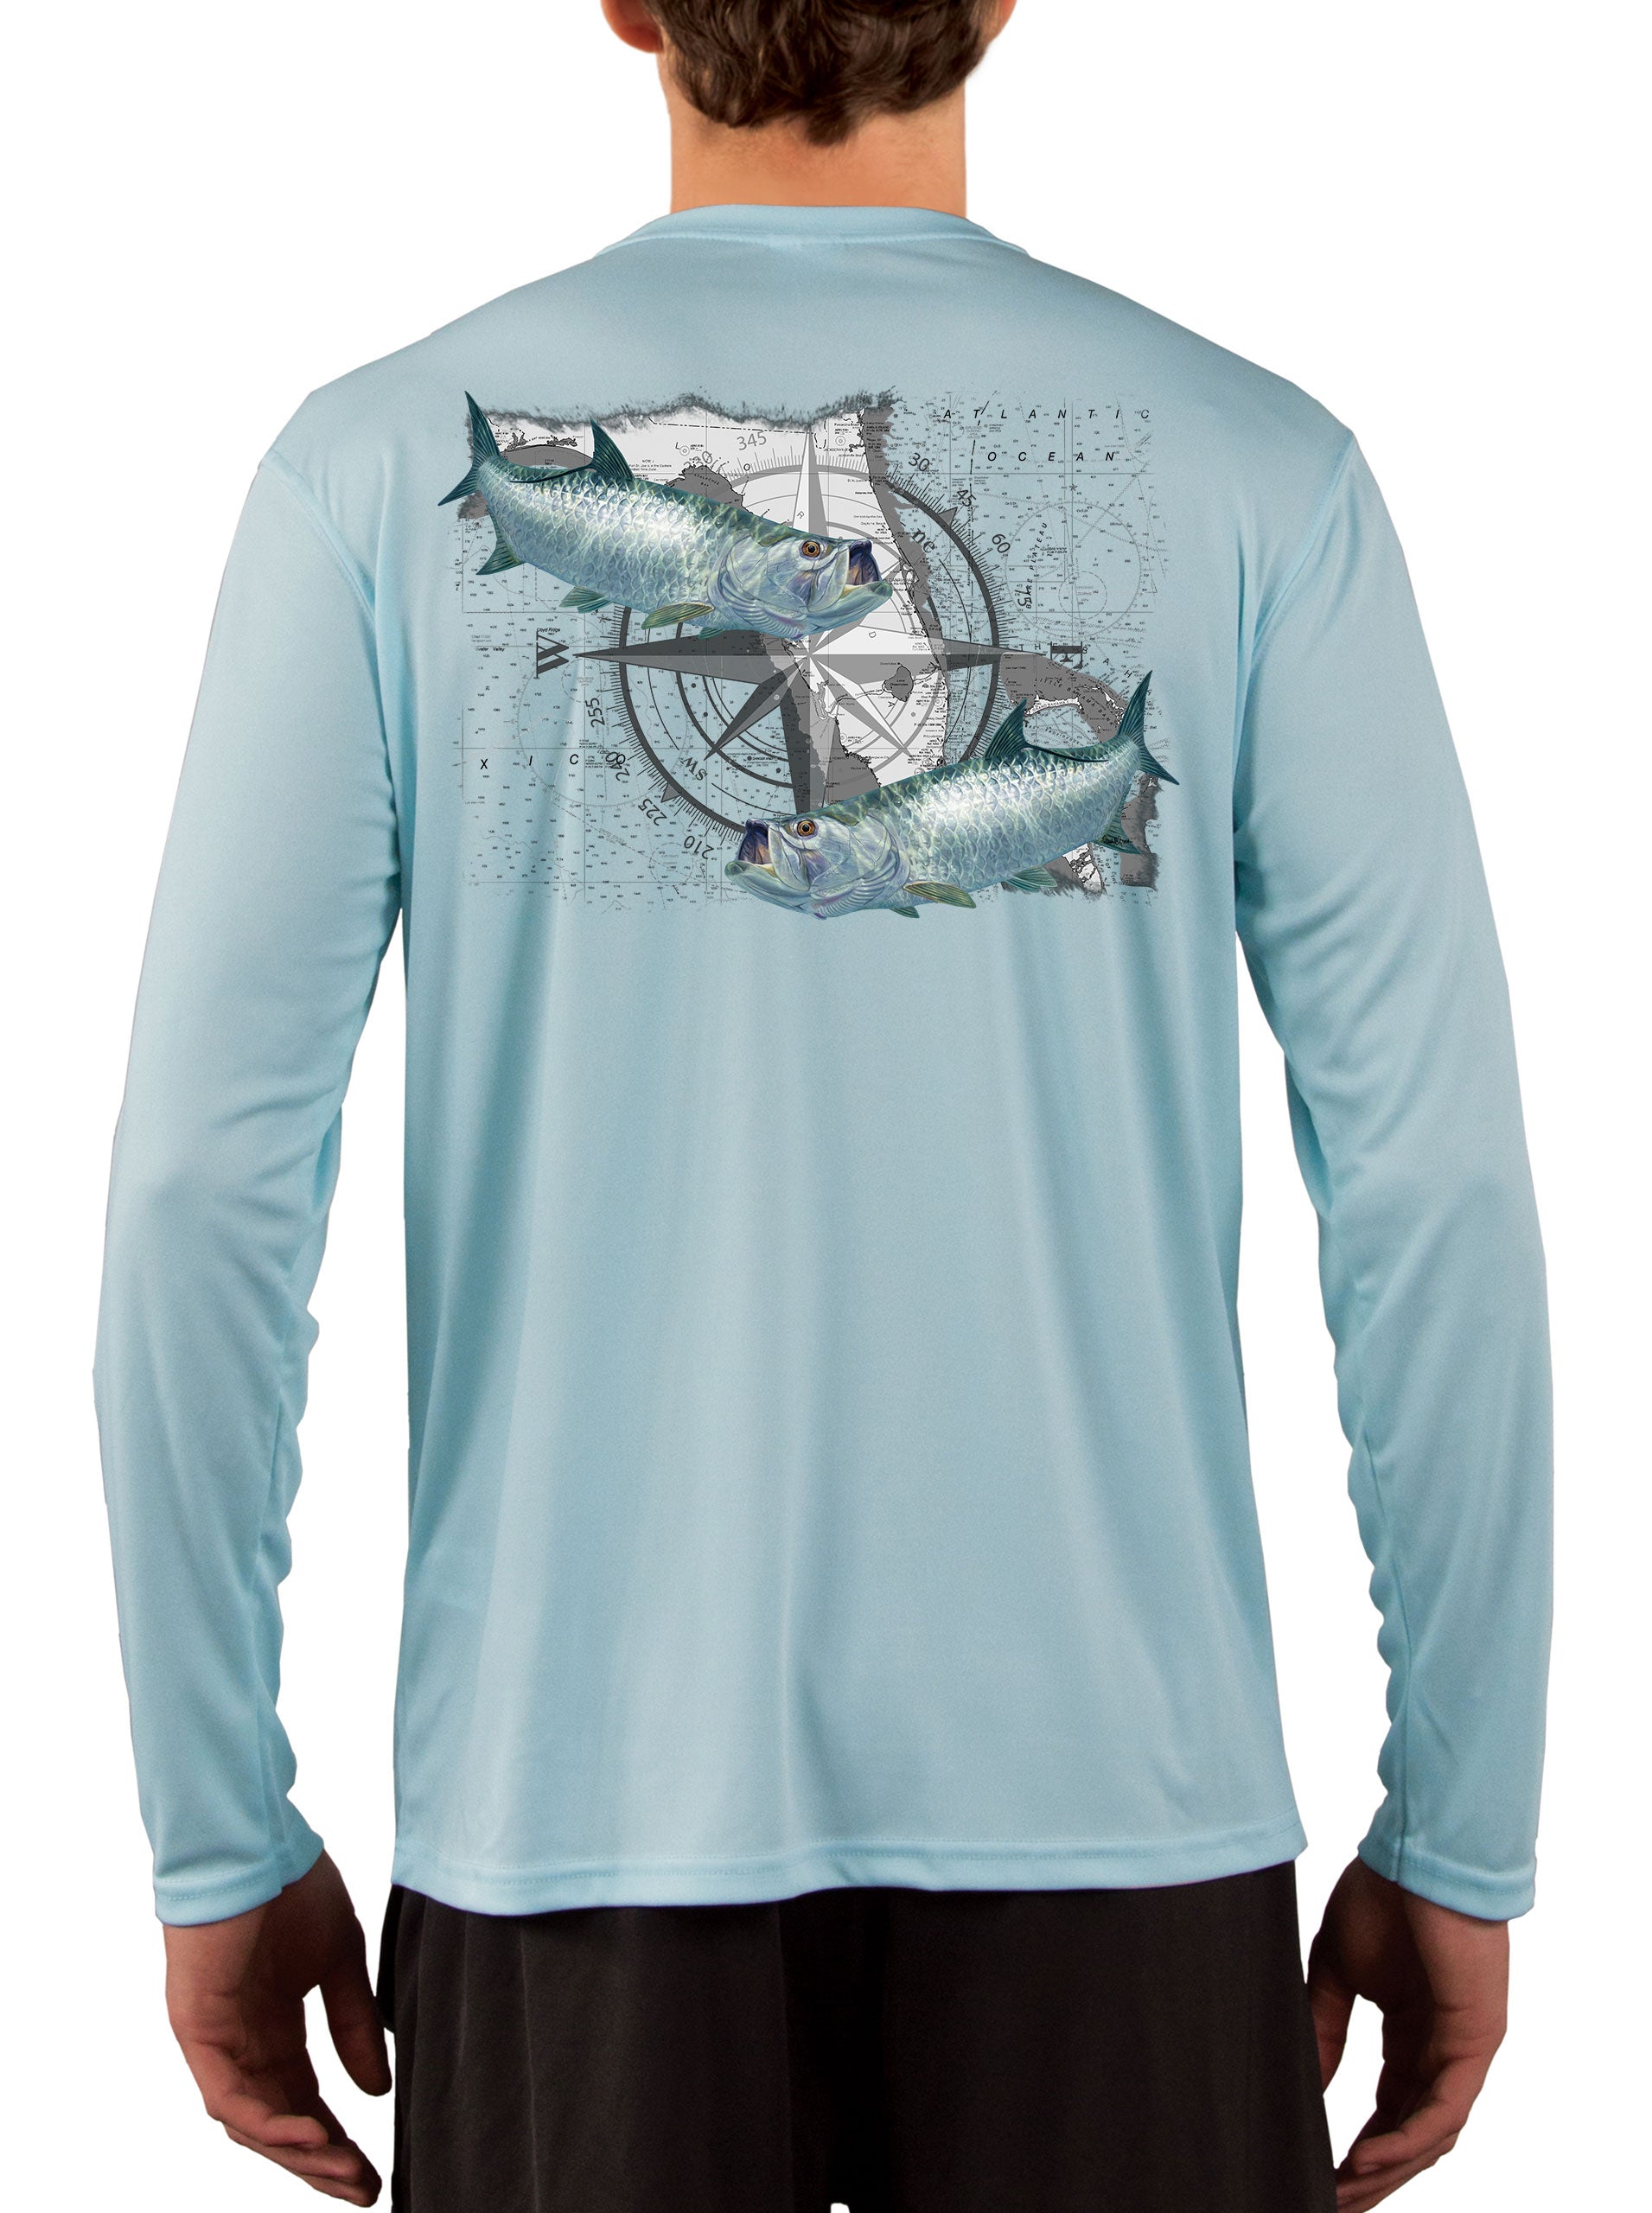 Tarpon Compass Fishing Shirts for Men Florida State Flag X-Large / Ice Blue